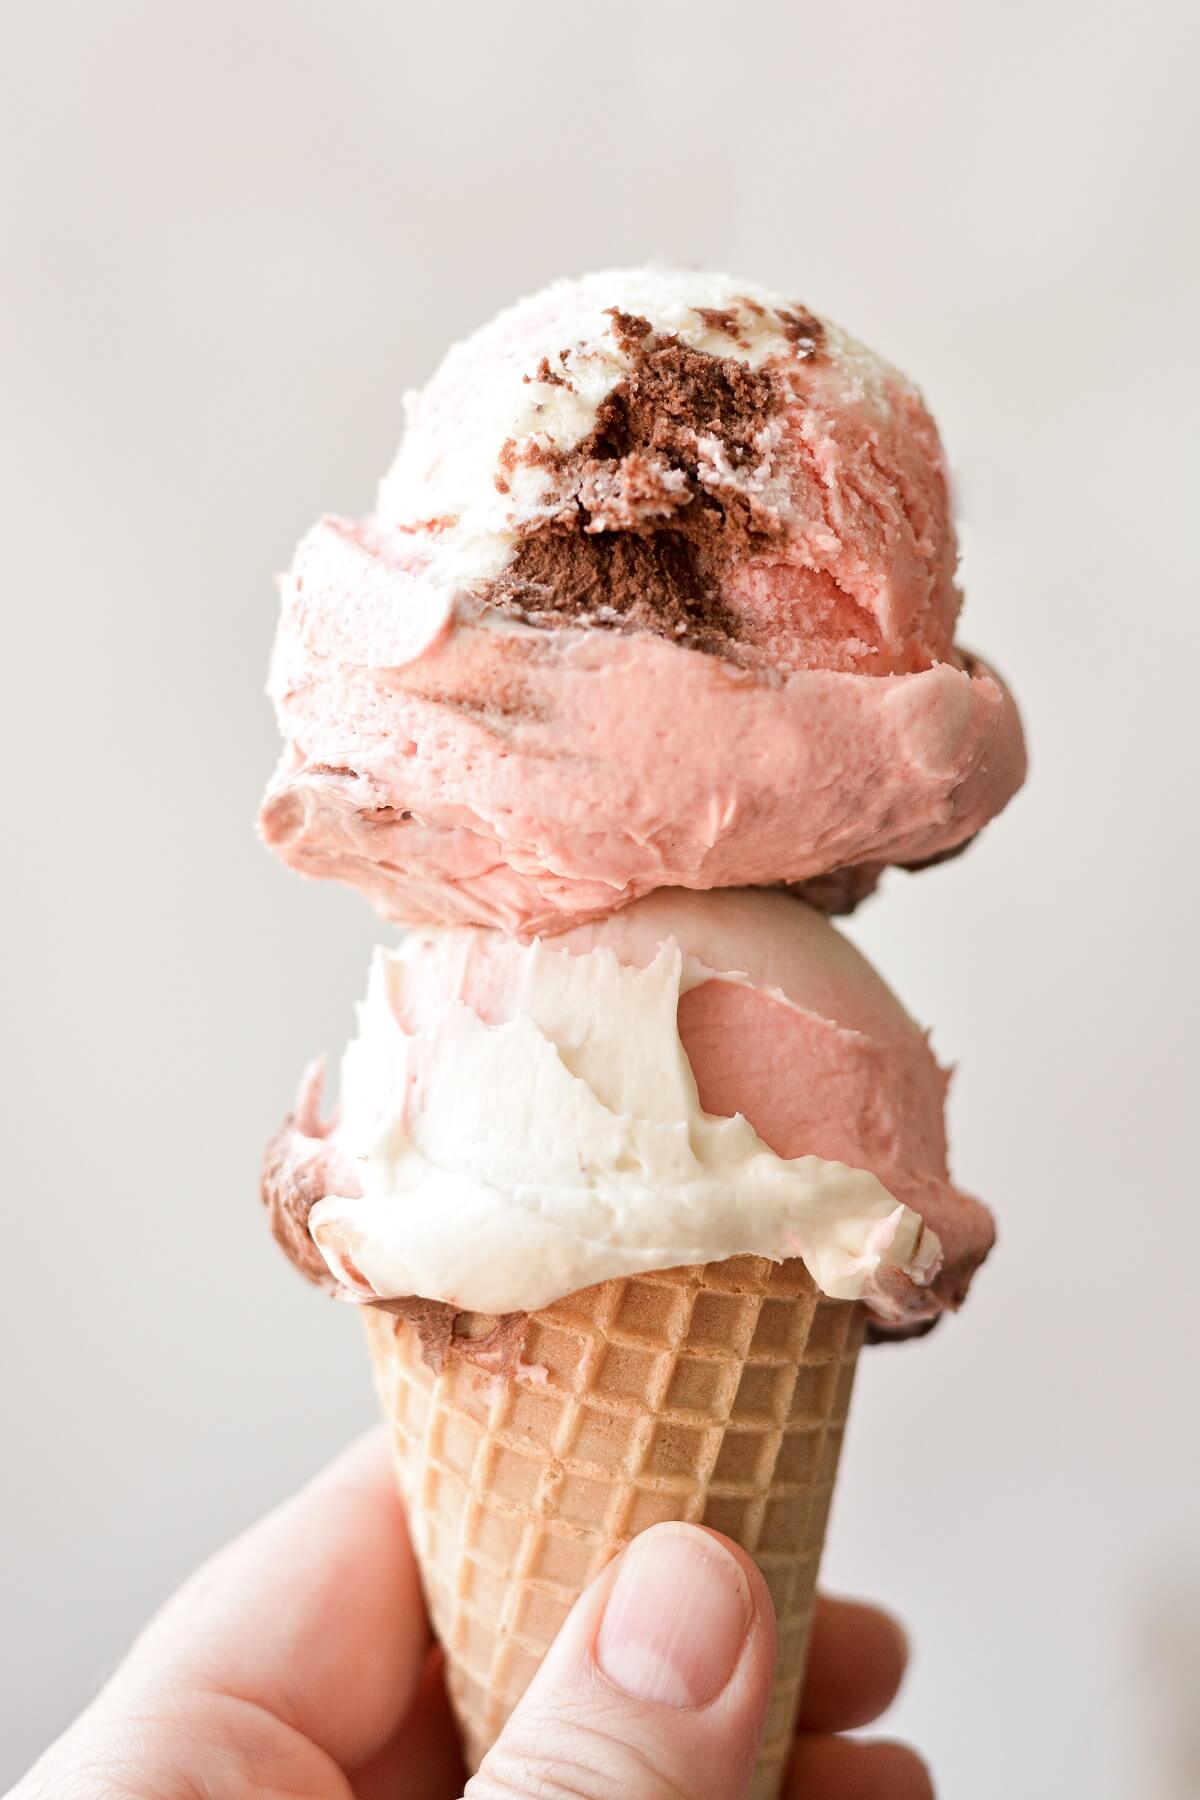 Neapolitan buttercream scooped like ice cream in an ice cream cone.